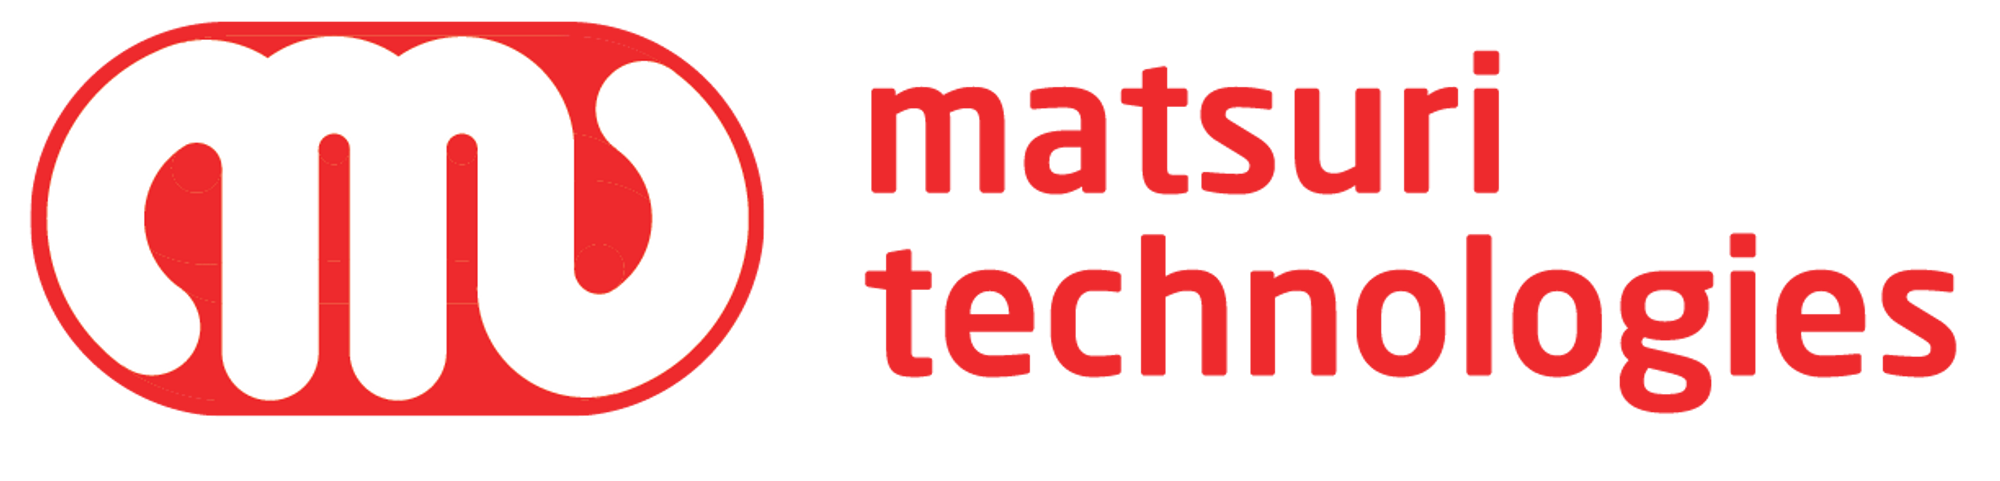 Matsuri Technologies Co., Ltd. corporate logo